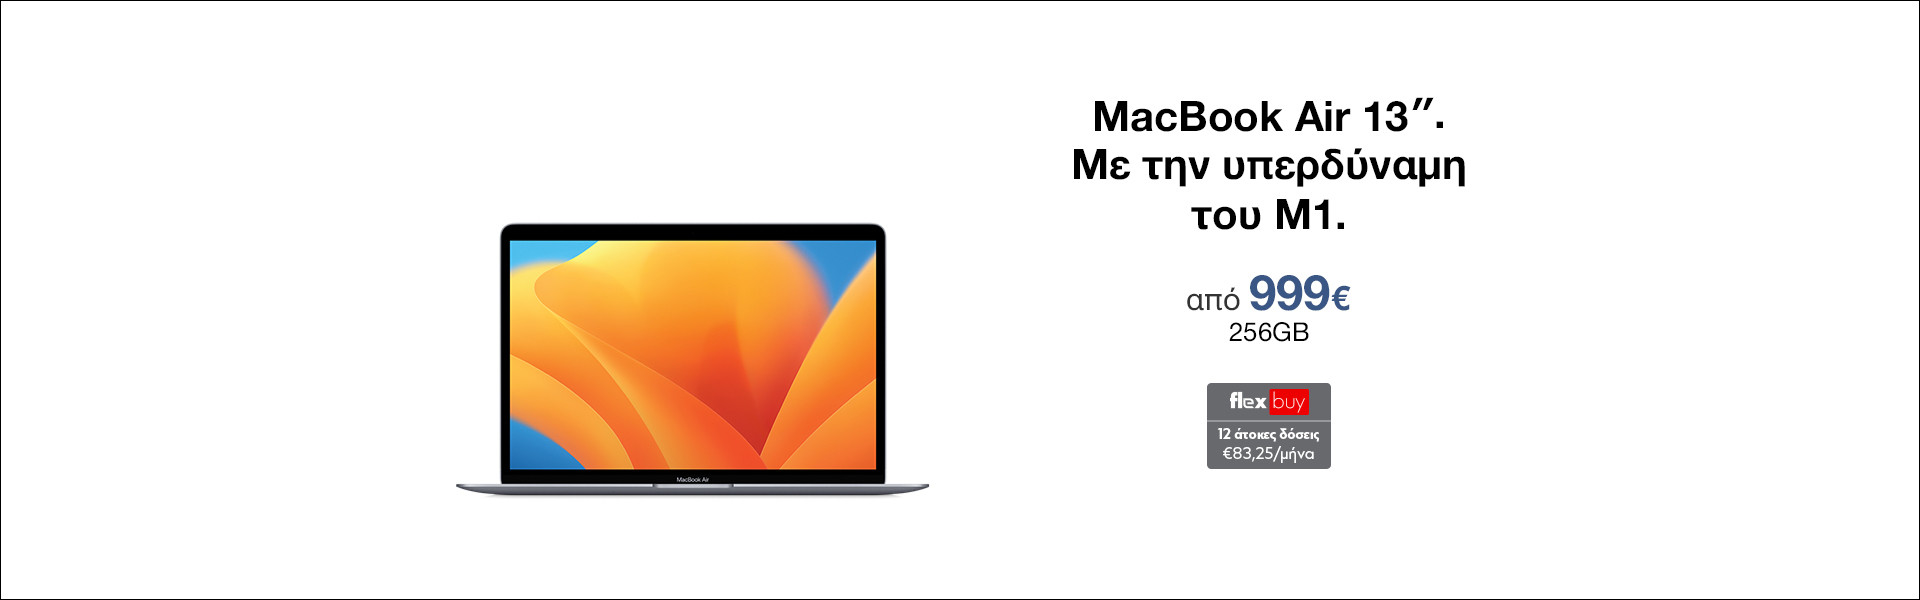 Screen Landing MacBook Air M1 campaign